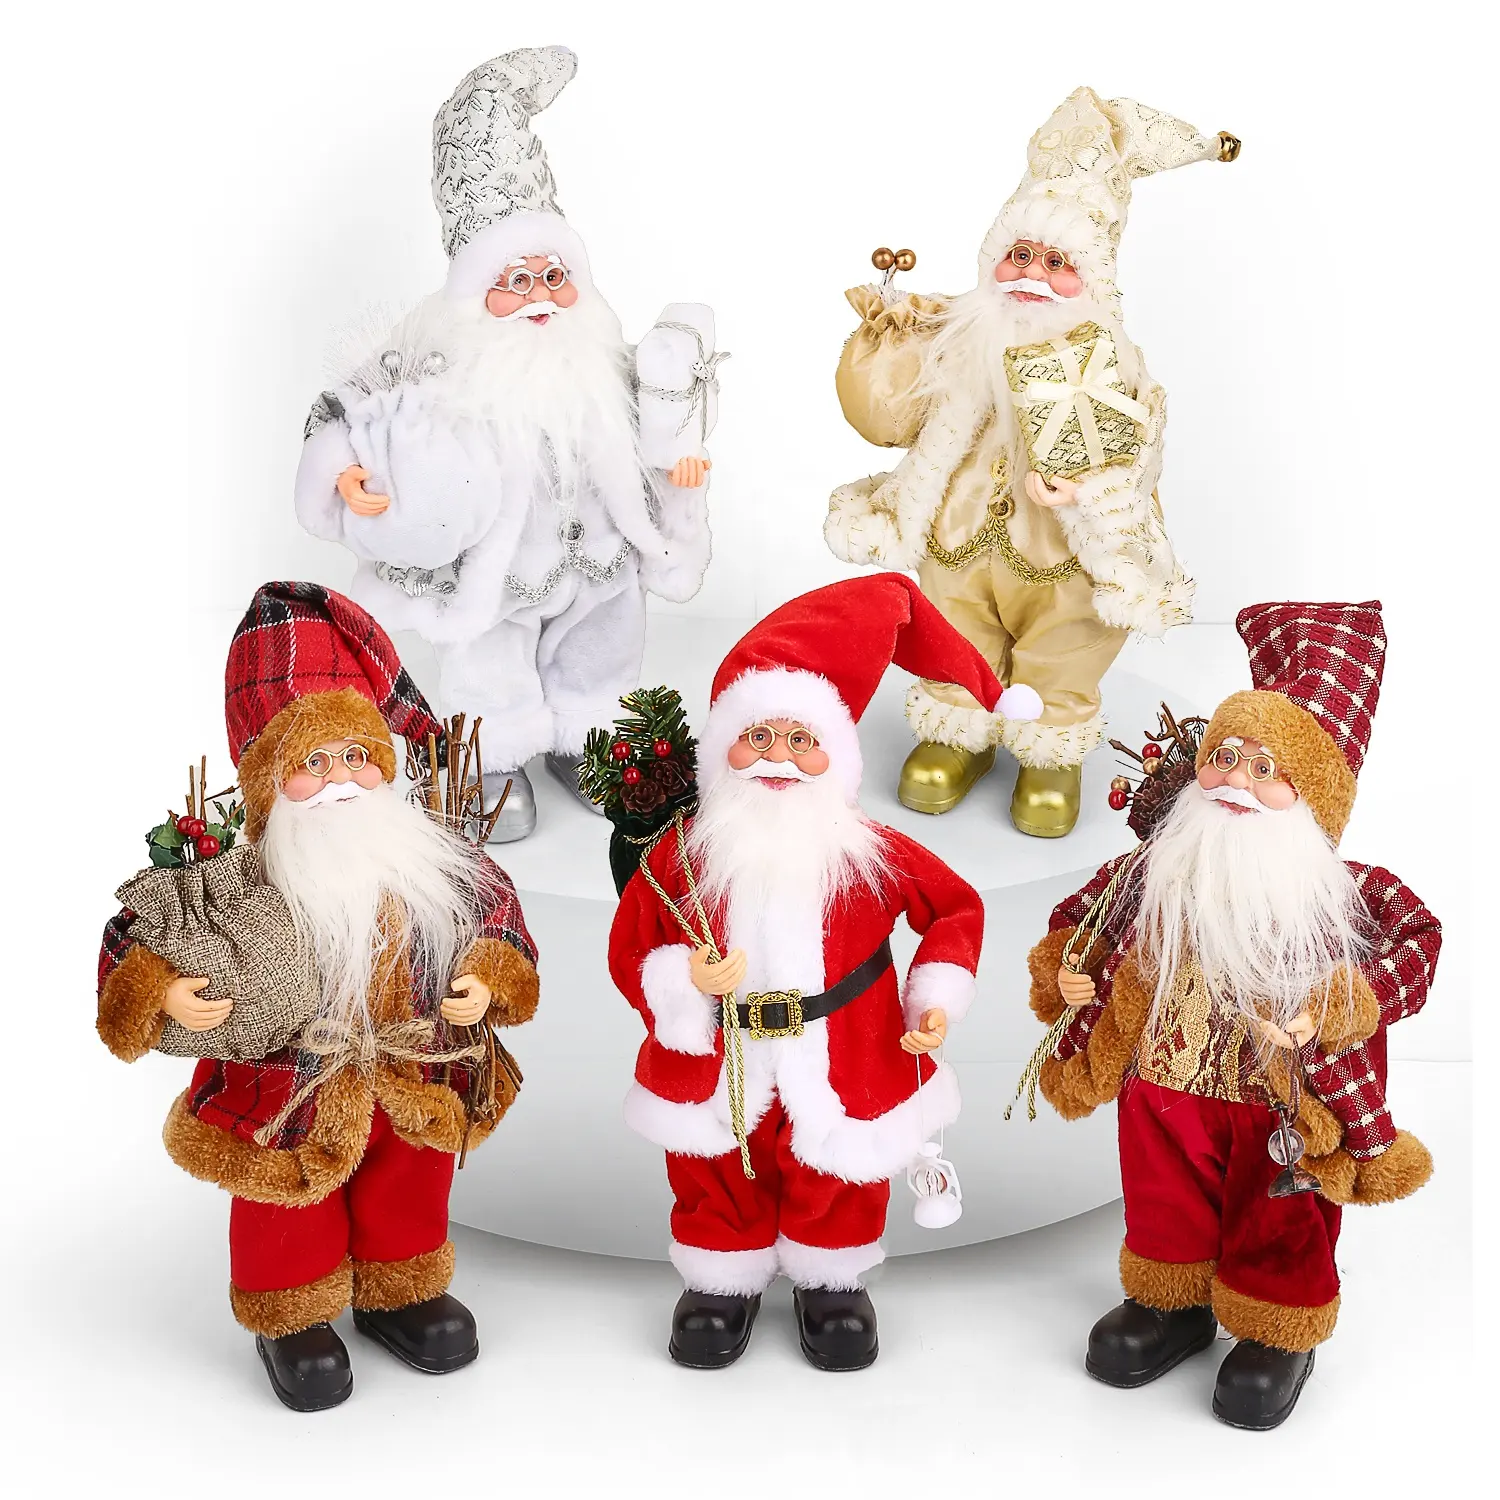 Merry Christmas Eve table decoration ornament Santa Claus plush stuffed dolls toys clothtique medium size figurine